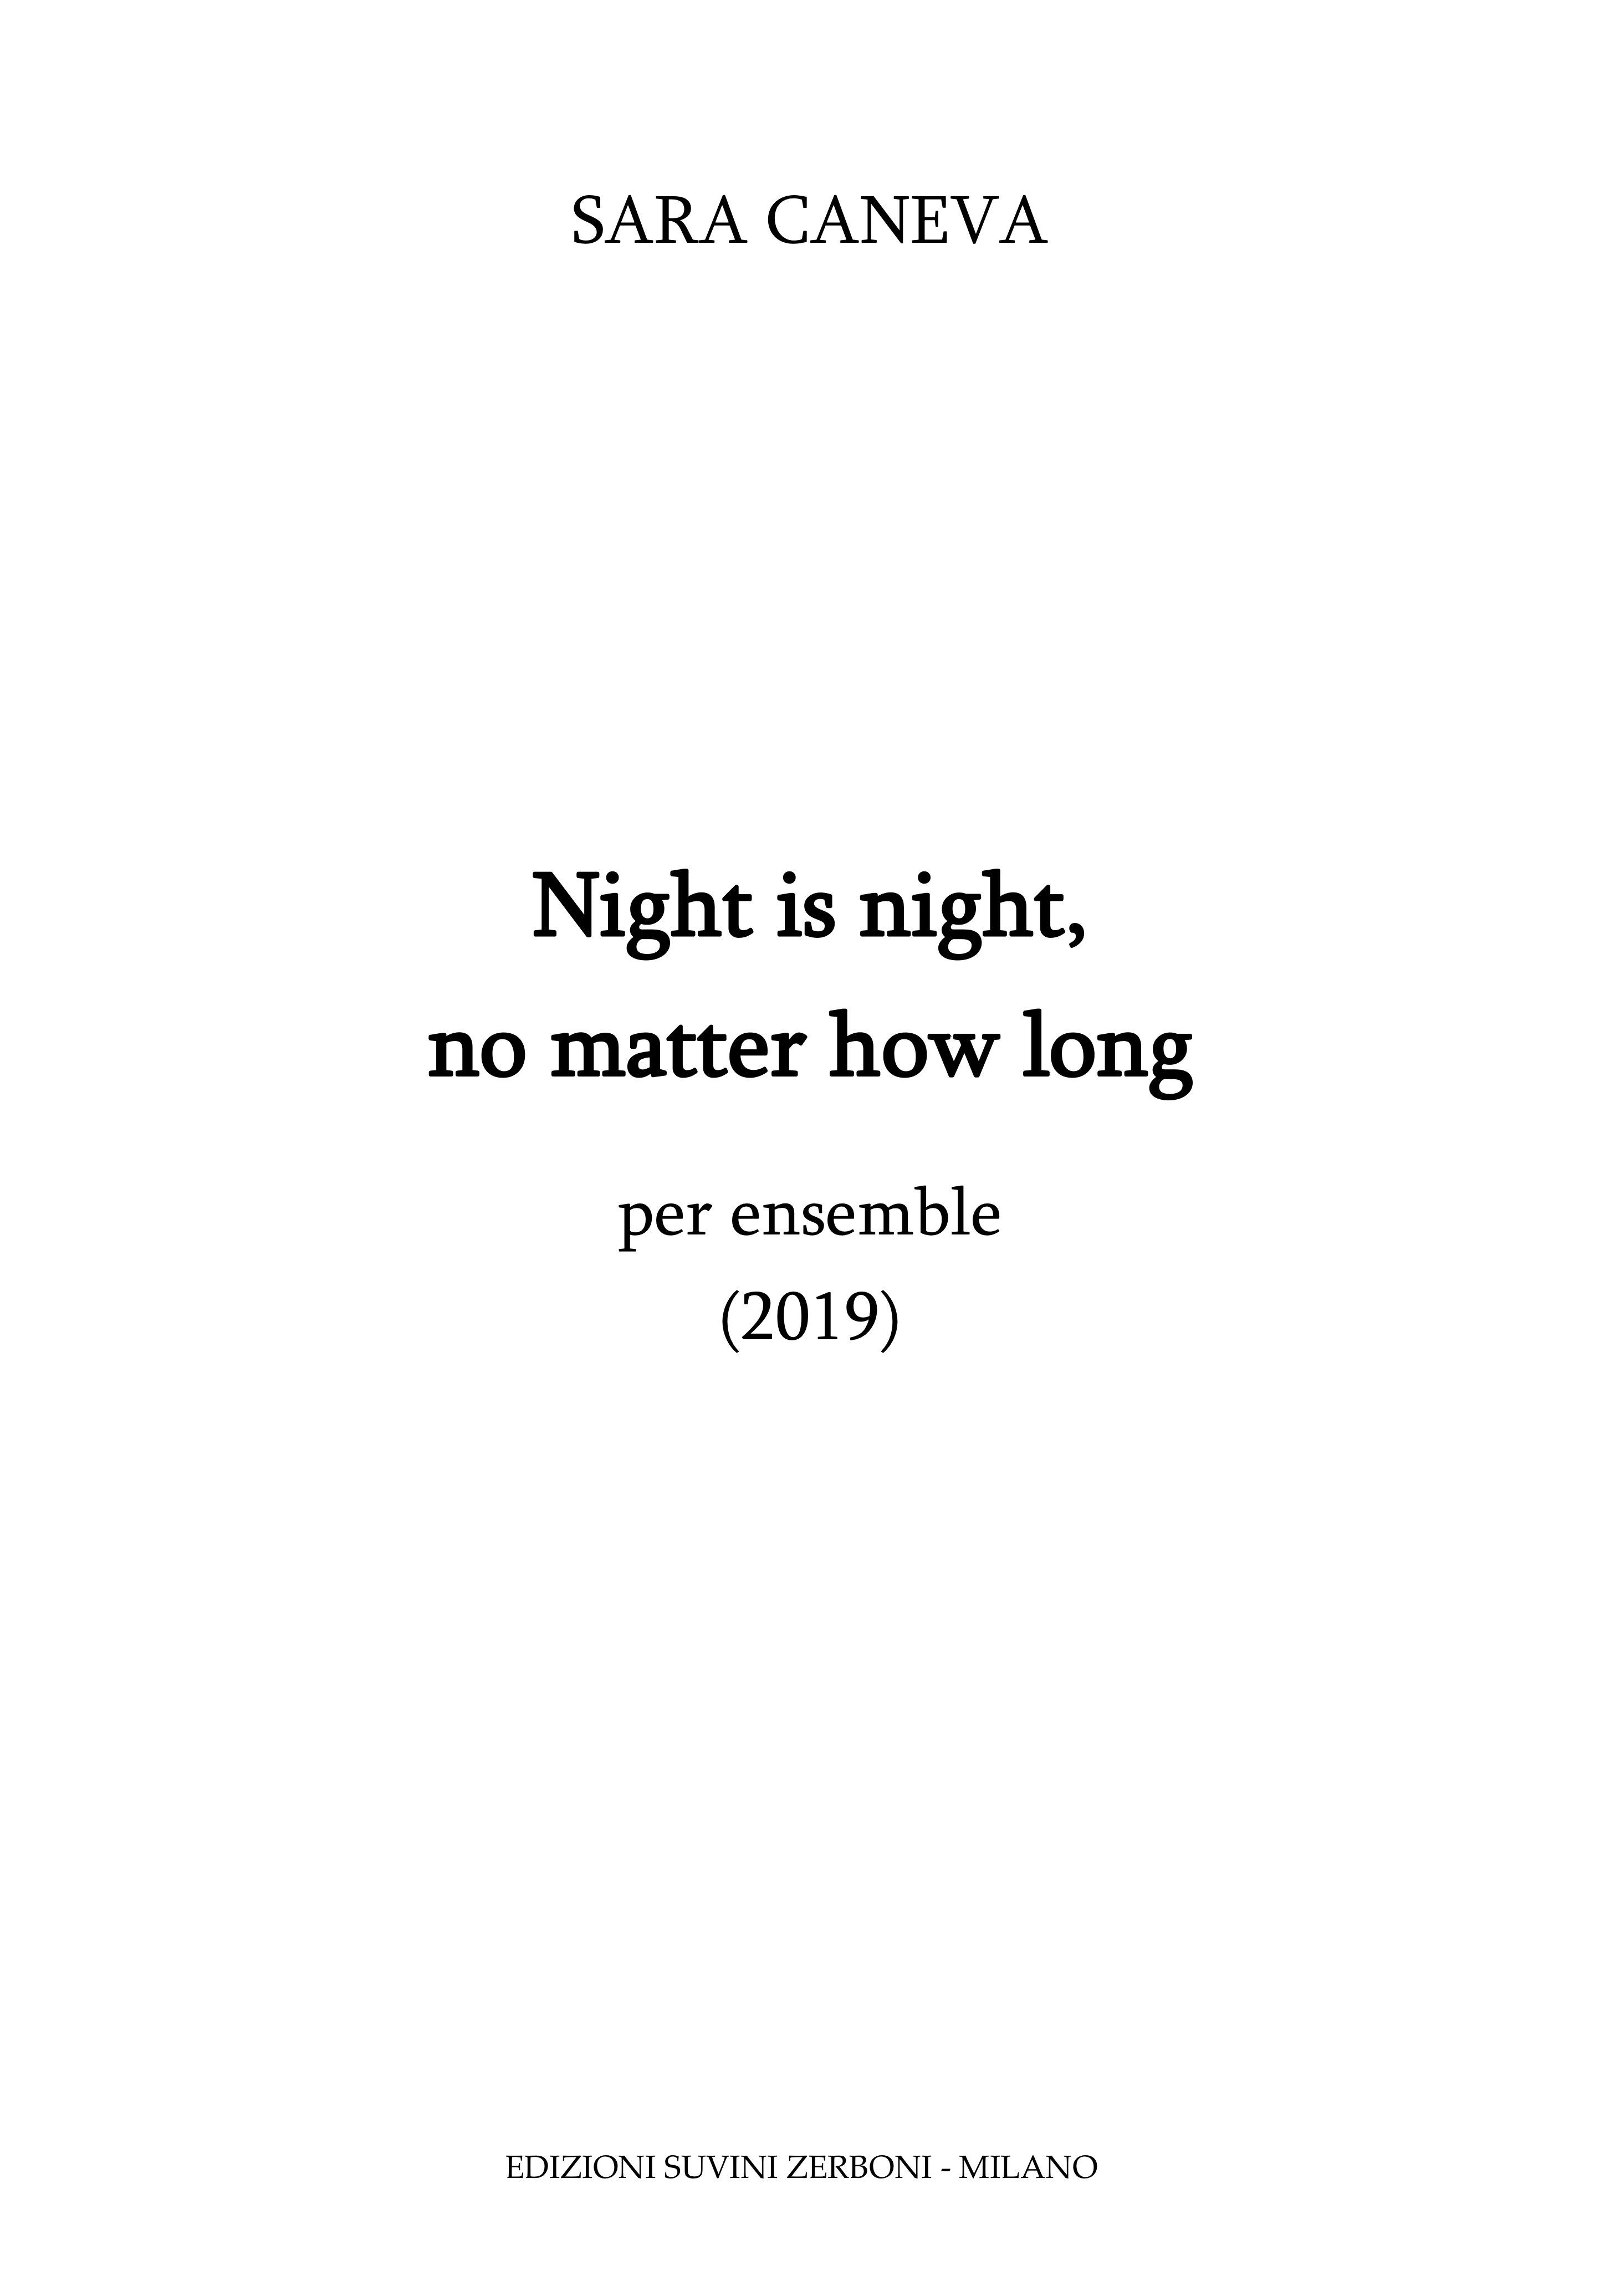 Night is night no matter how long_Caneva 1